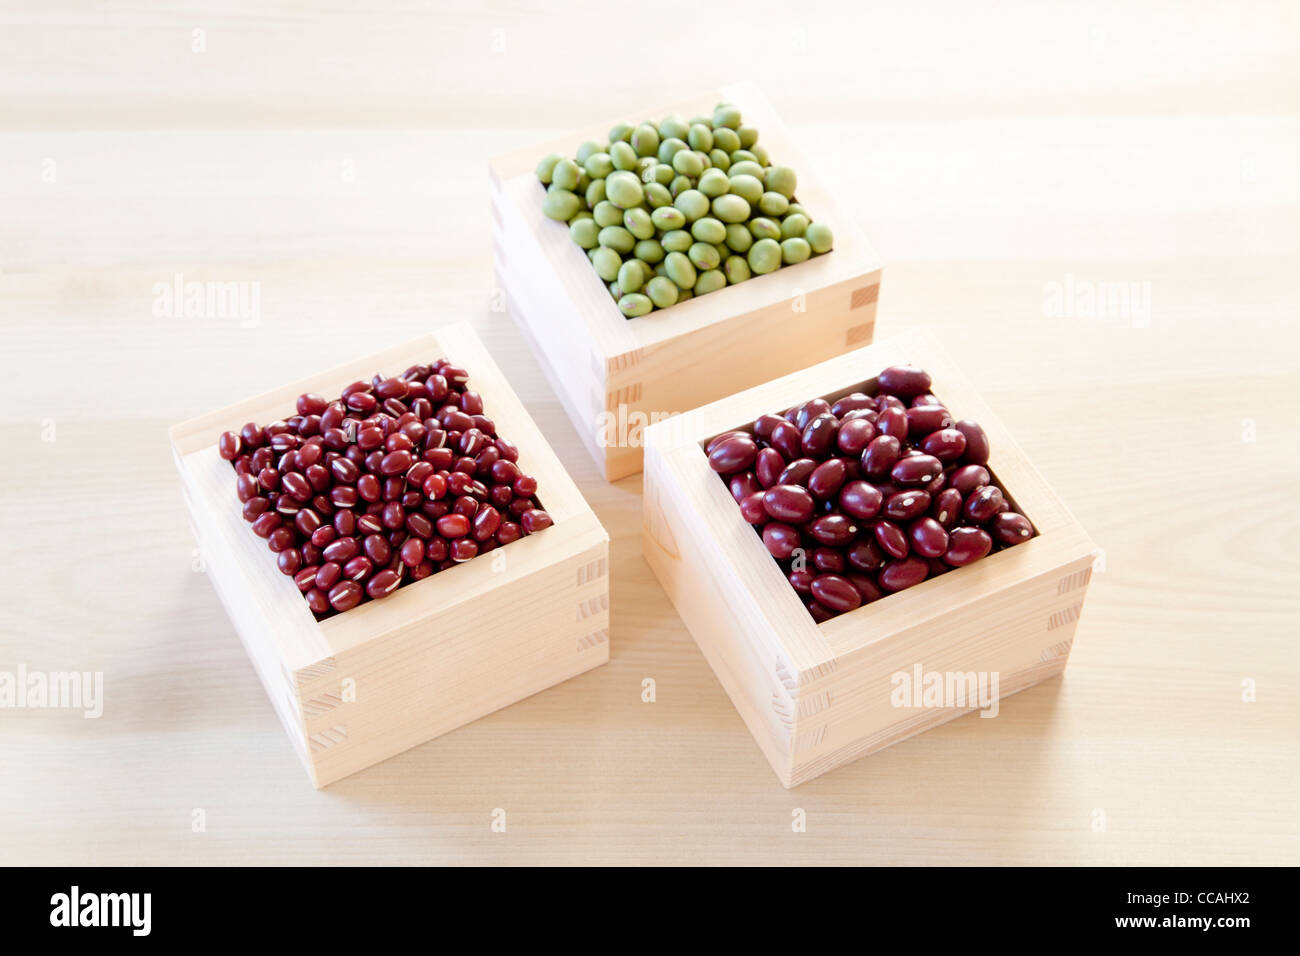 Three boxes of Beans Stock Photo